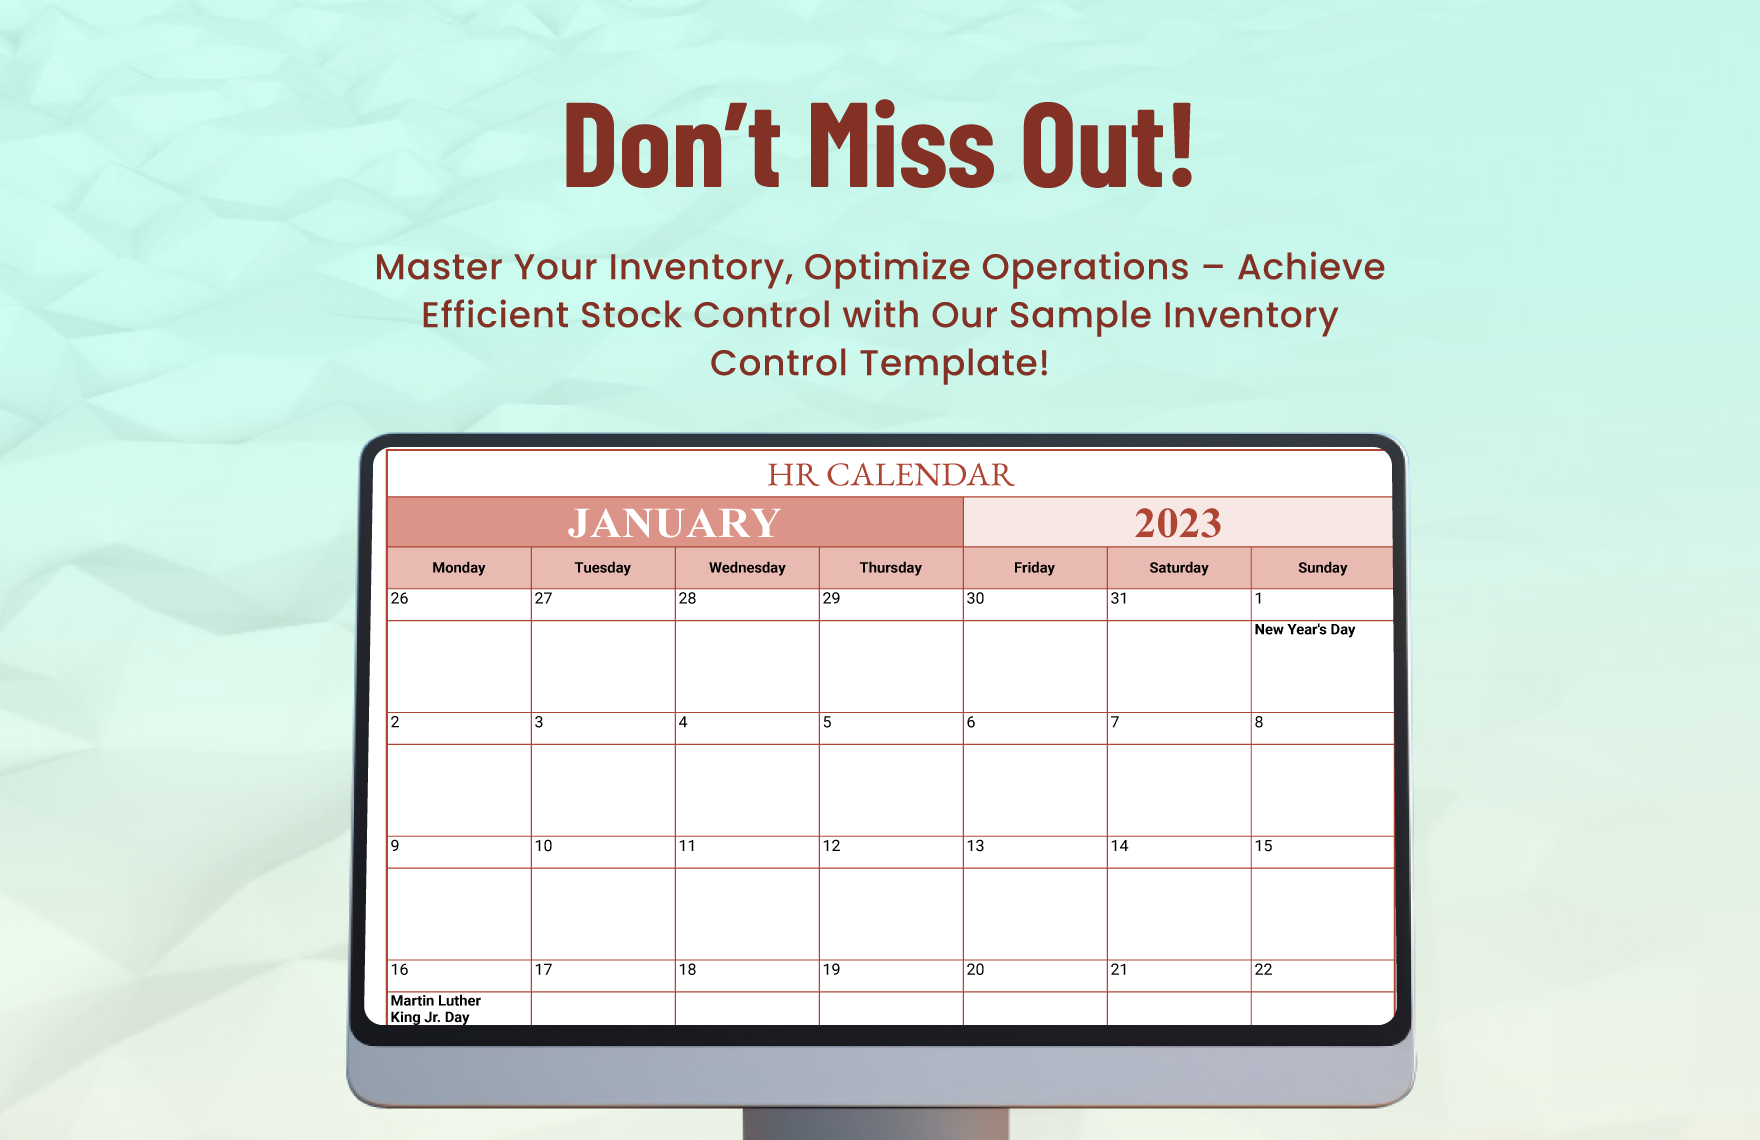 Sample HR Calendar Template